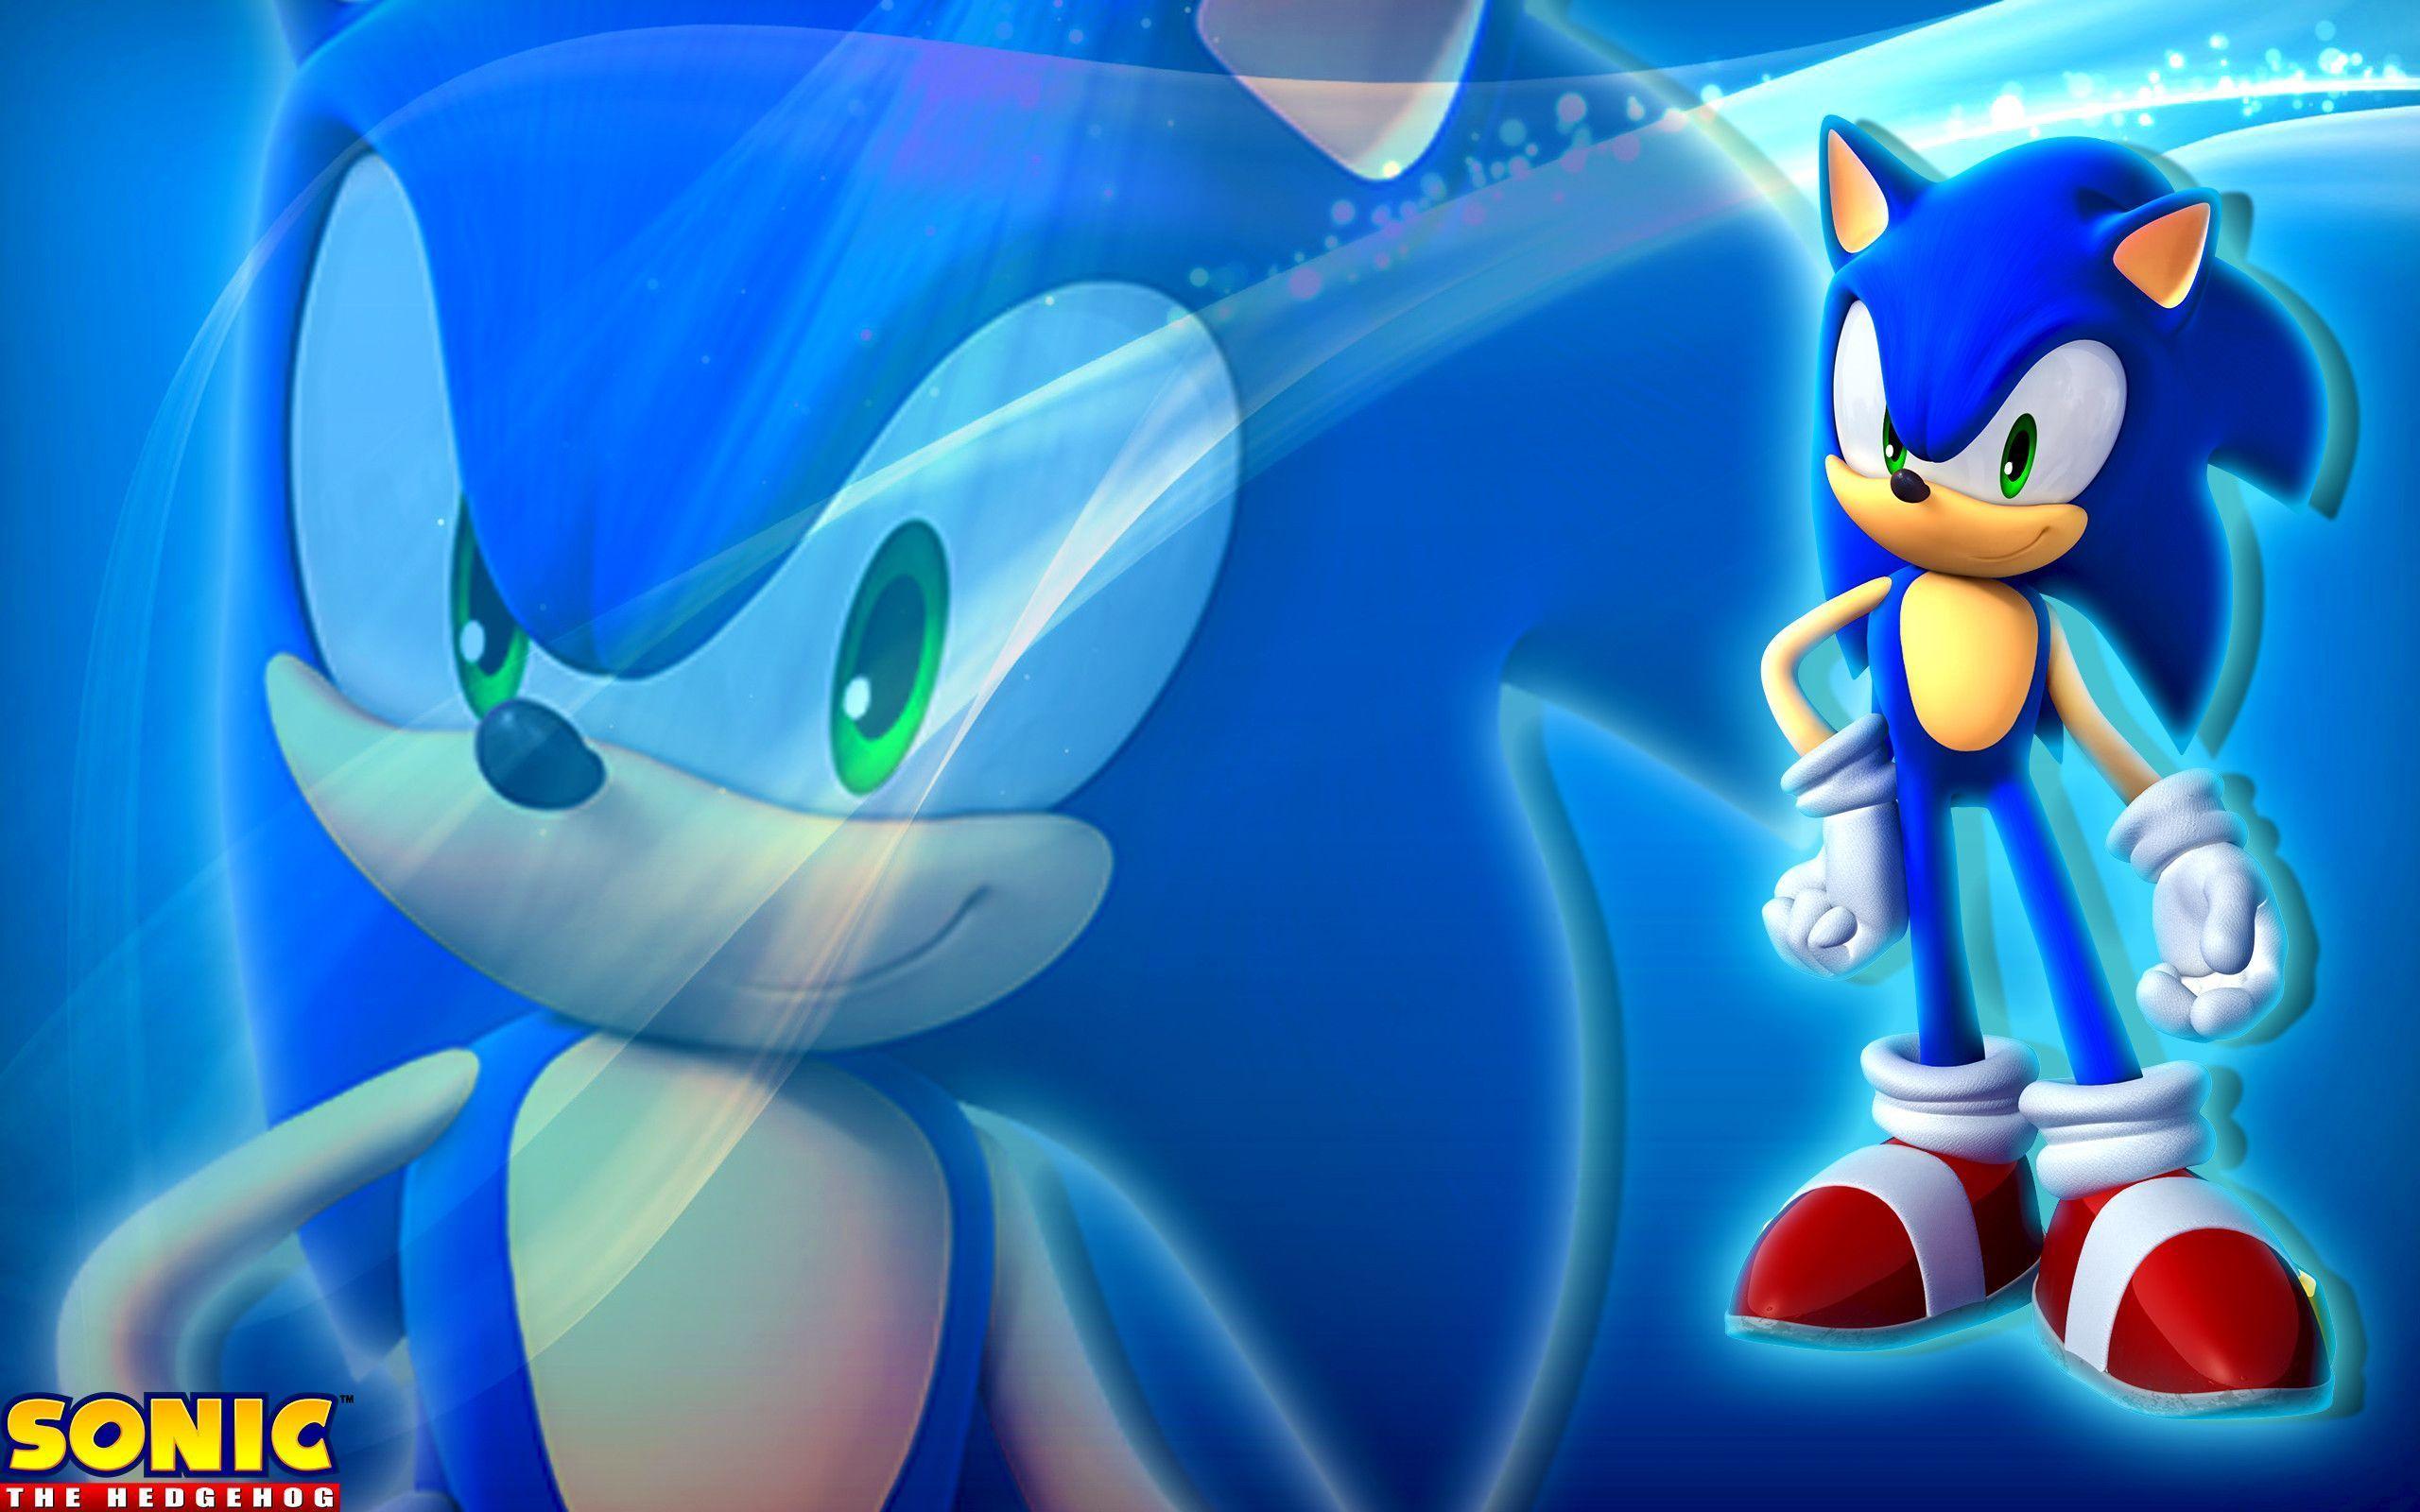 Sonic The Hedgehog Wallpaper. HD Background Wallpaper. Cartoon